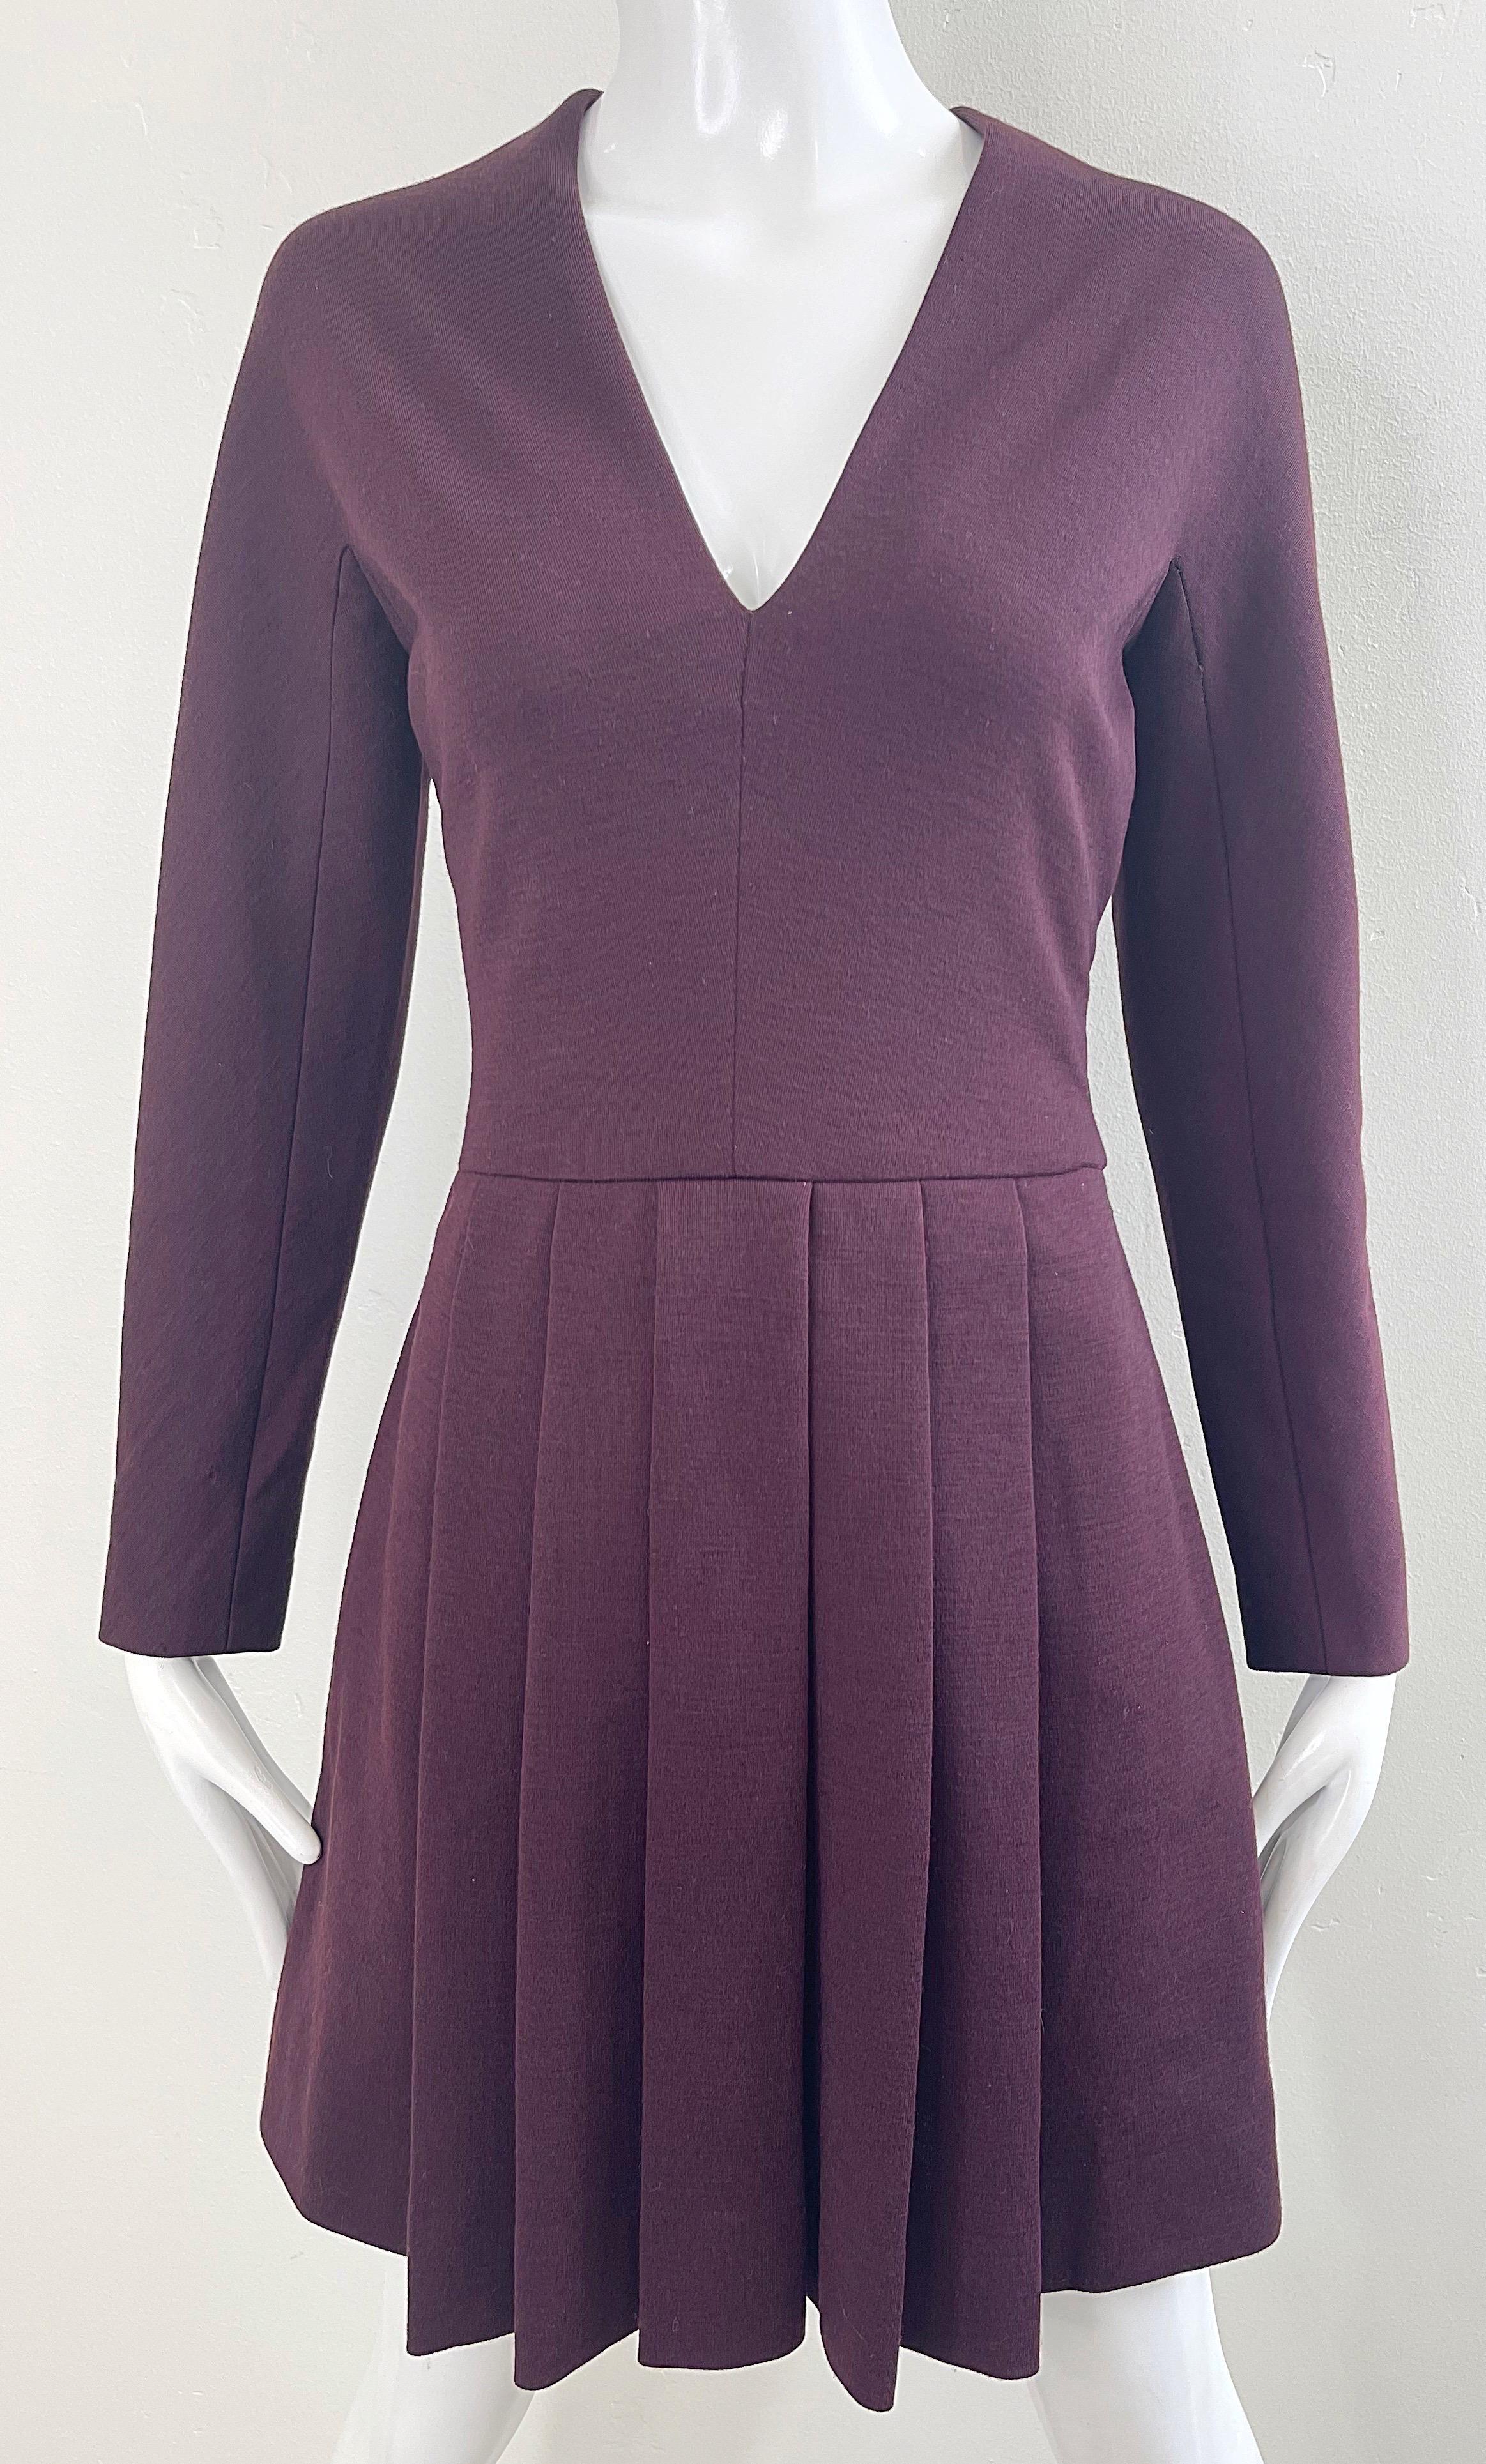 Pauline Trigere 1970s Burgundy Maroon Wool Long Sleeve Vintage 70s Mini Dress For Sale 1